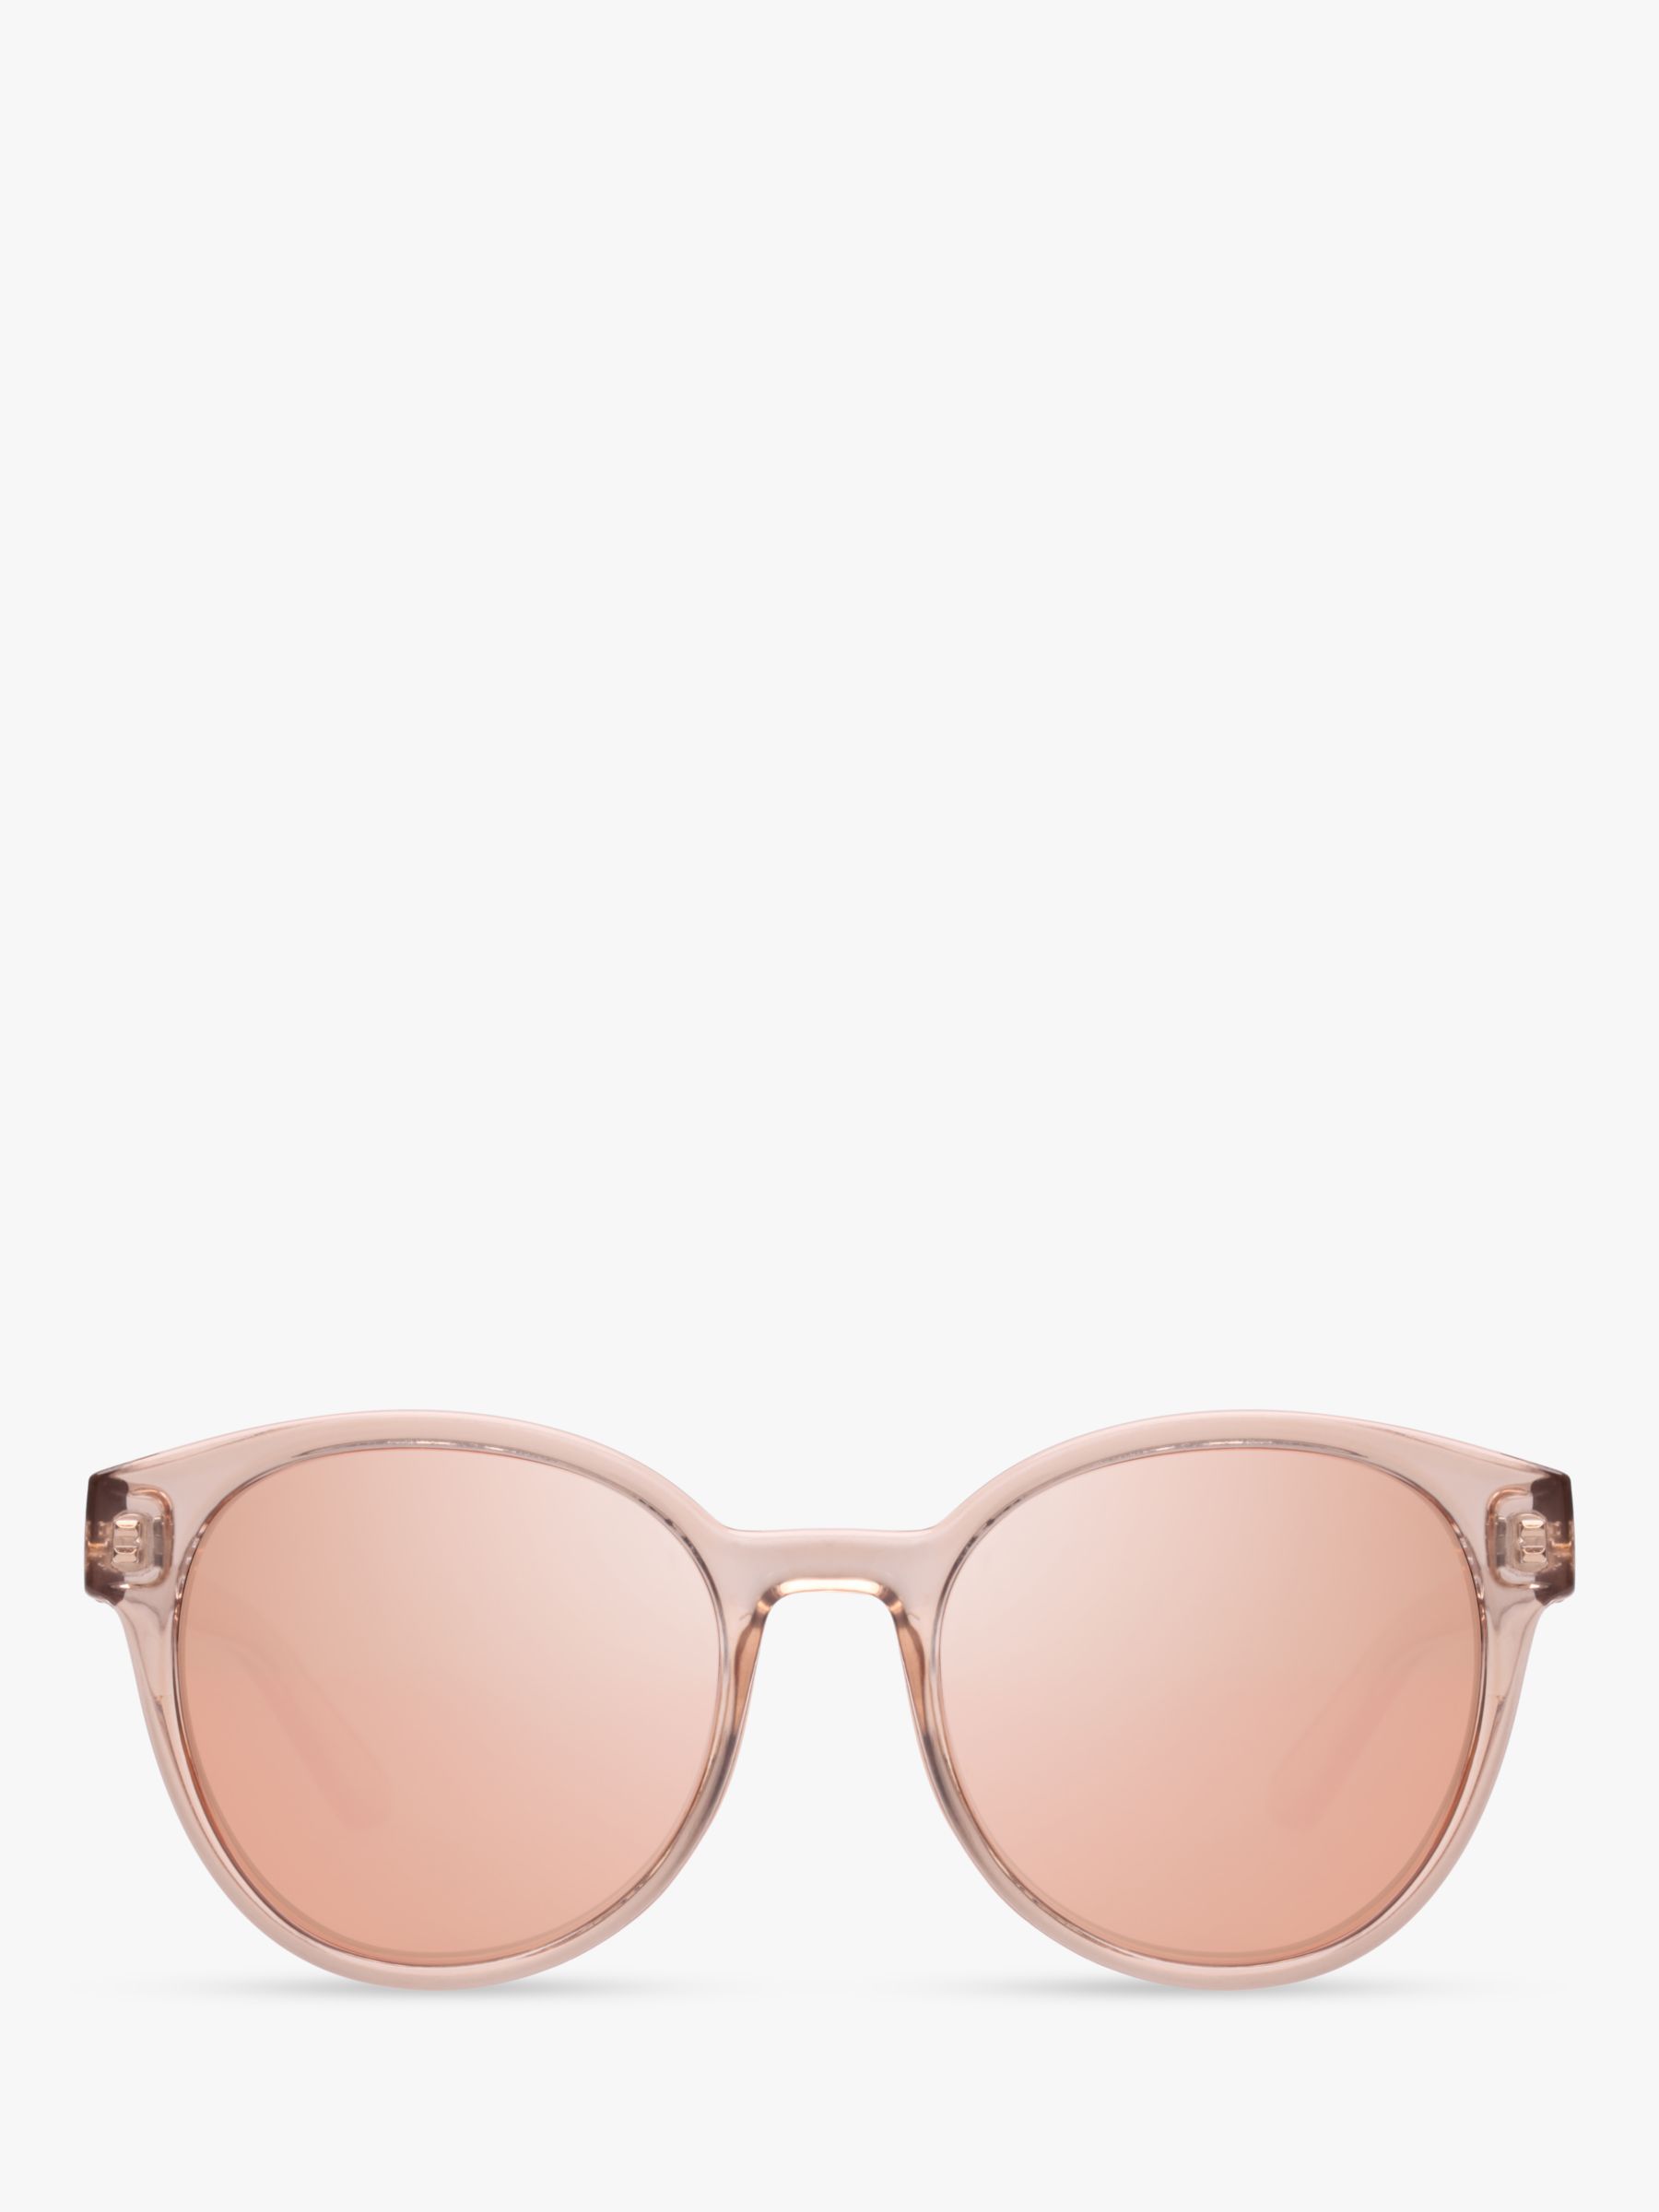 Buy Le Specs L5000149 Women's Paramount Round Sunglasses, Tan Online at johnlewis.com